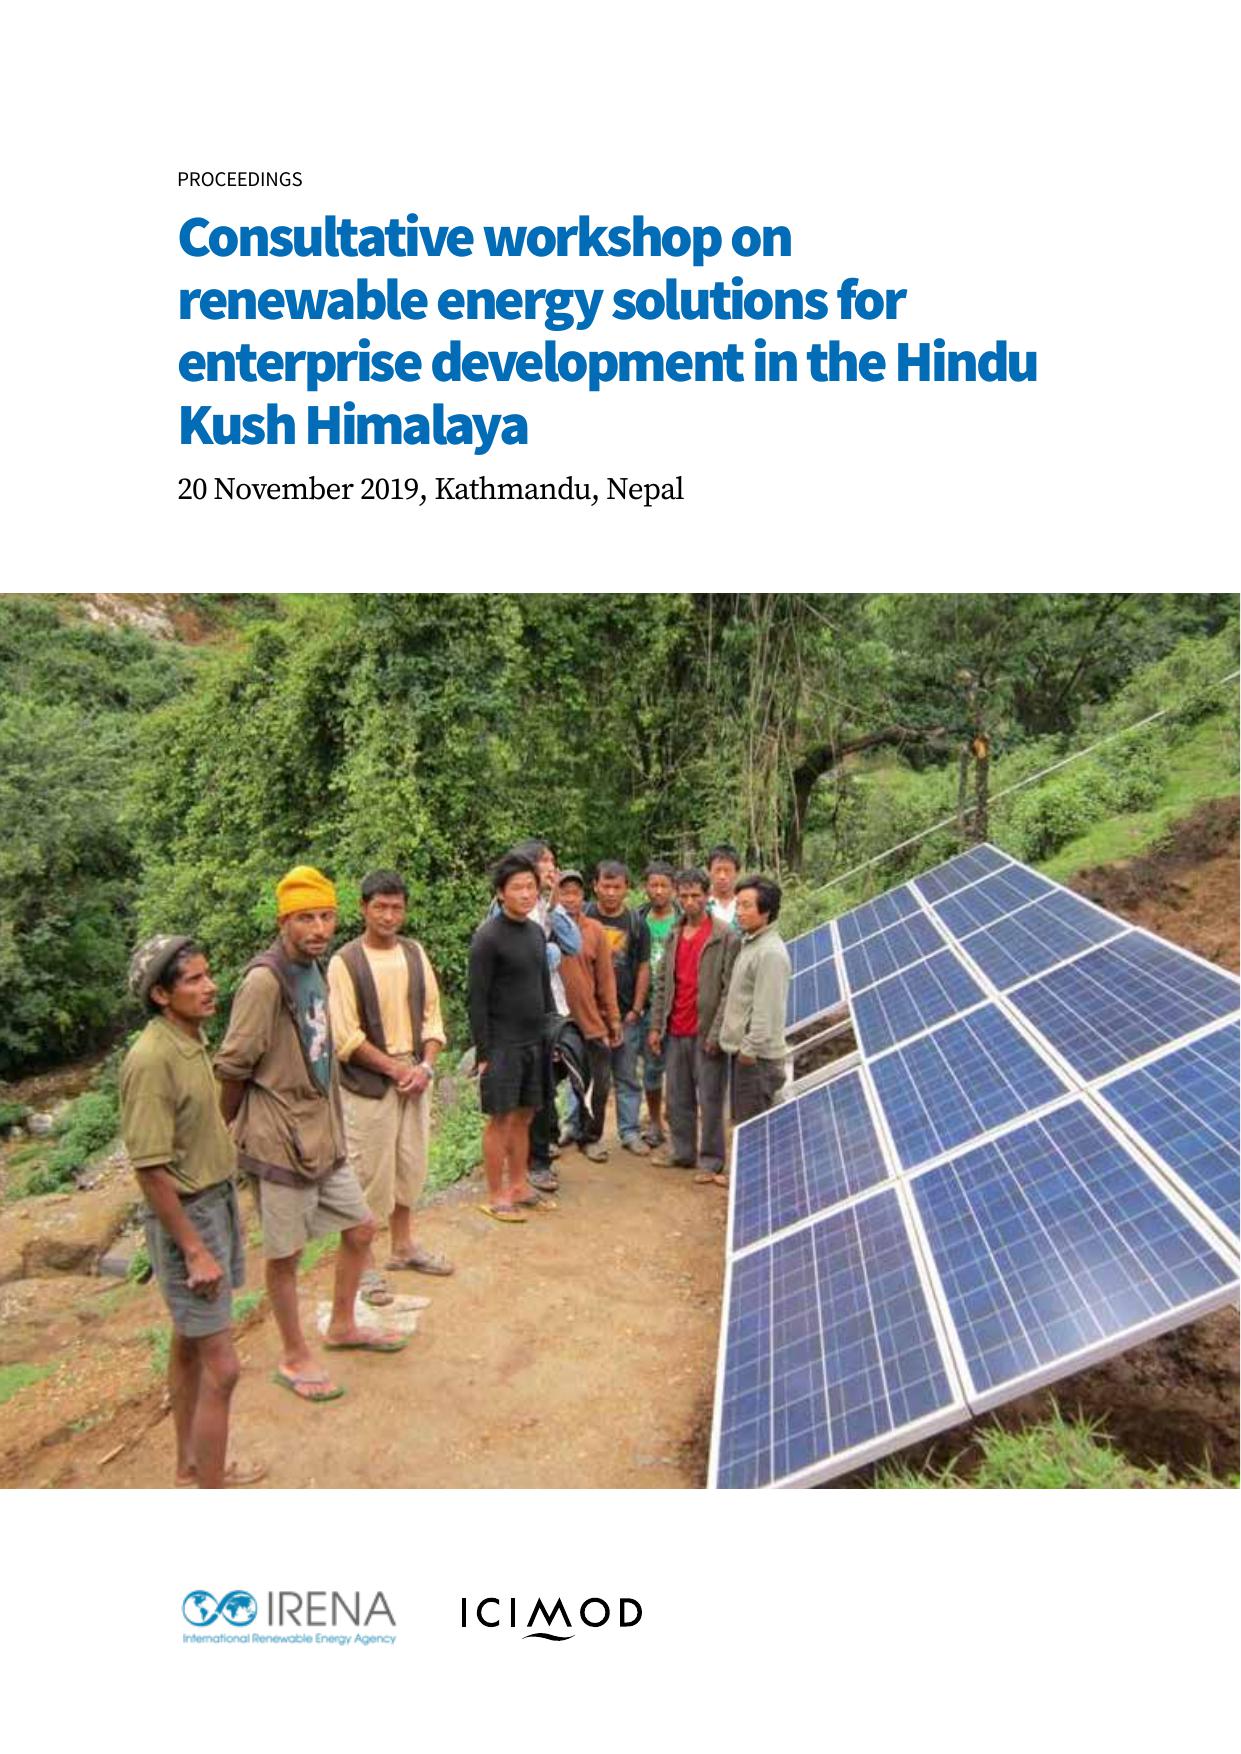 Proceedings of the consultative workshop on renewable energy solutions for enterprise development in the Hindu Kush Himalaya